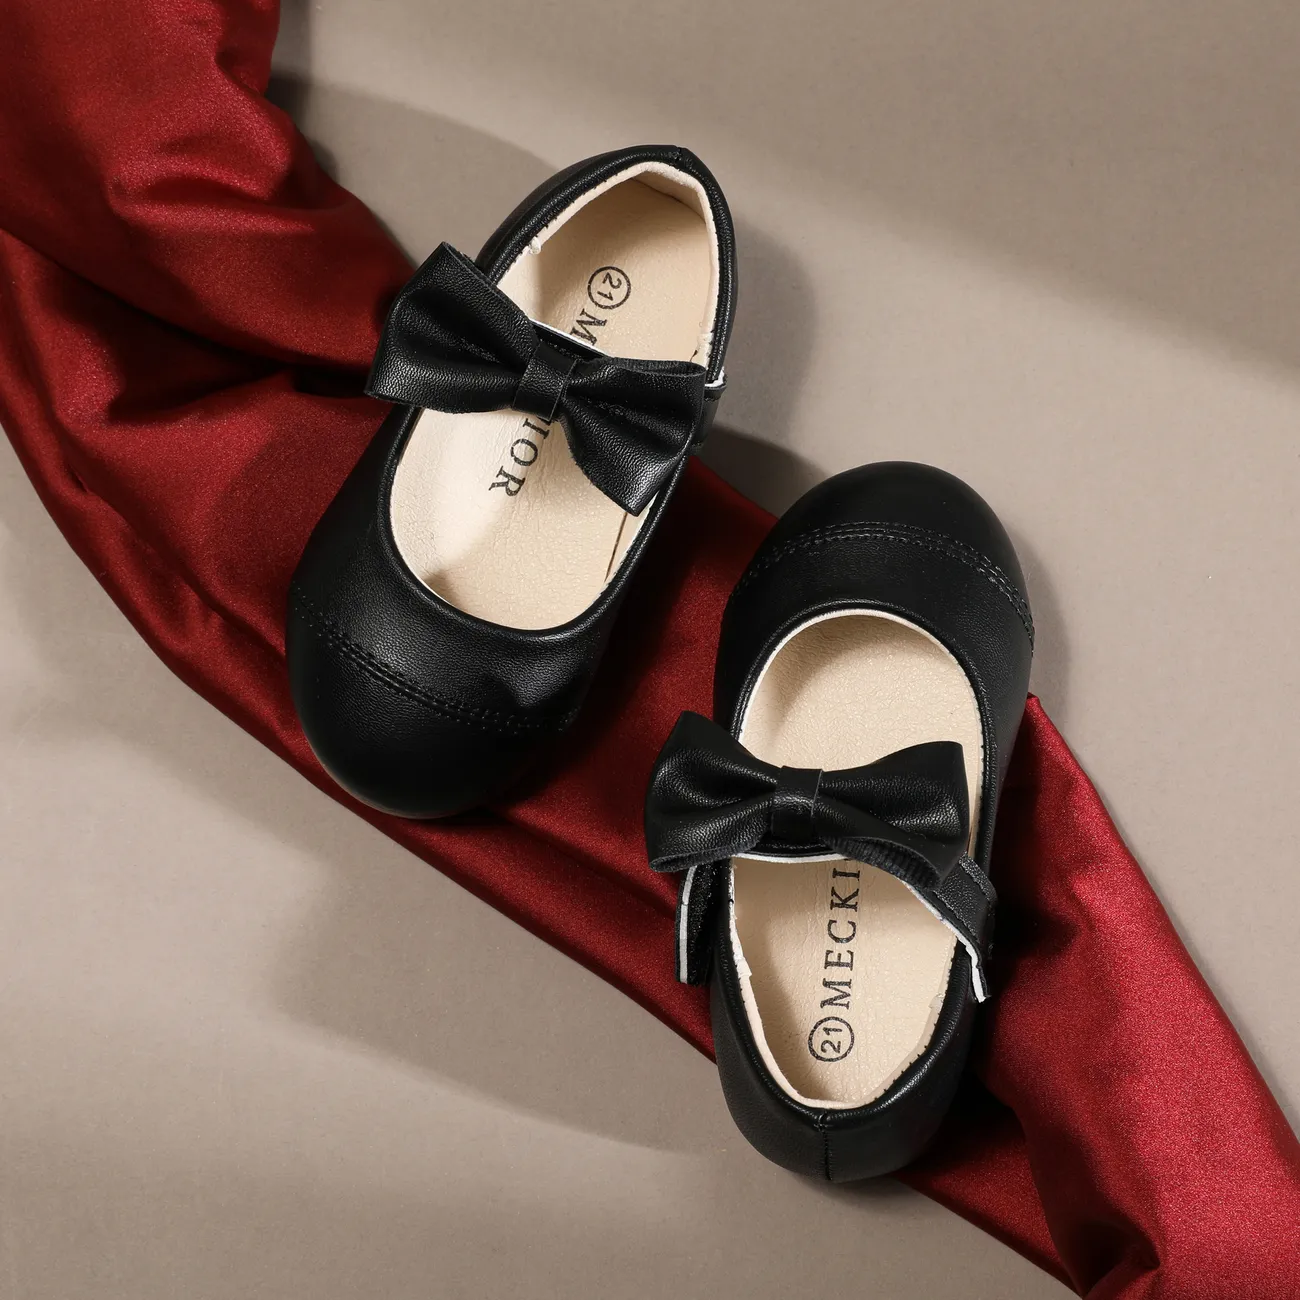 Toddler/Kids Girl Solid Hyper-Tactile 3D Bow-tie Leather Shoes  Black big image 1